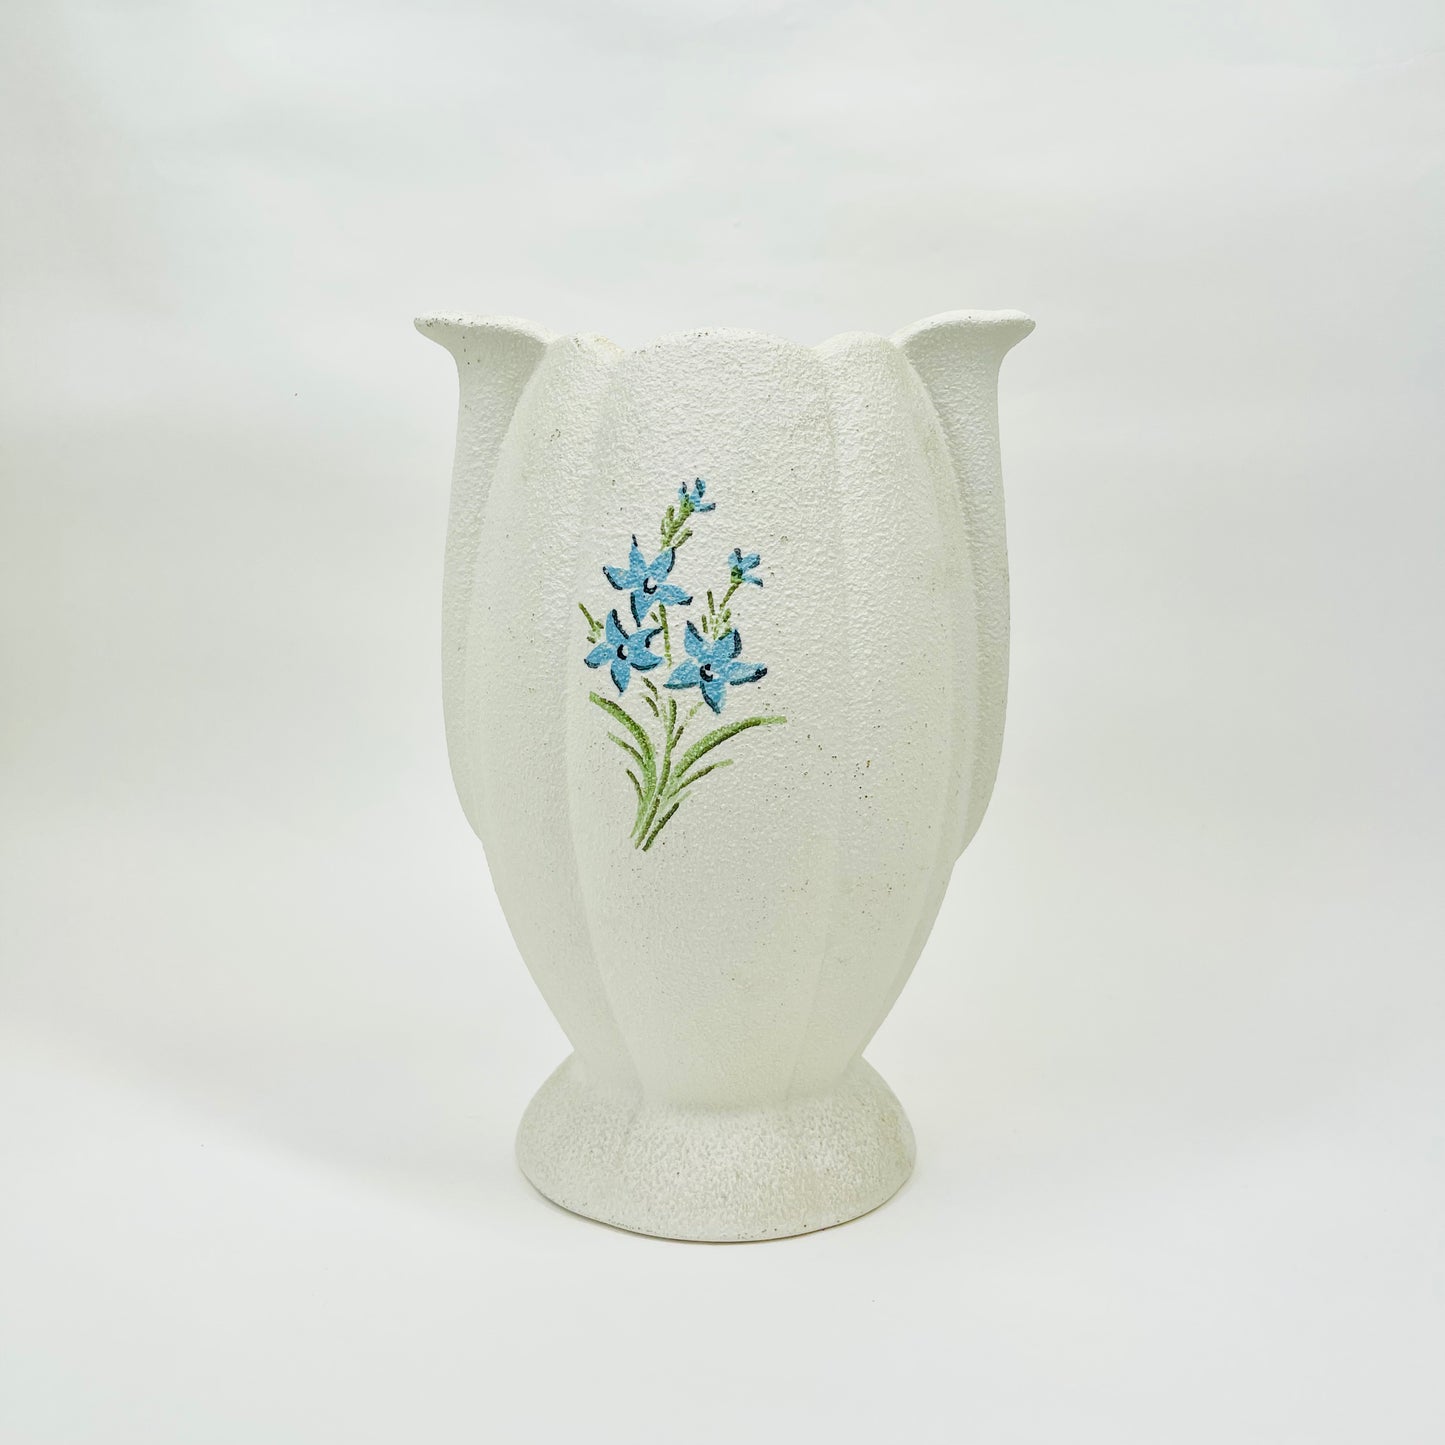 Retro Australian Raynham white pottery vase with hand painted blue flowers